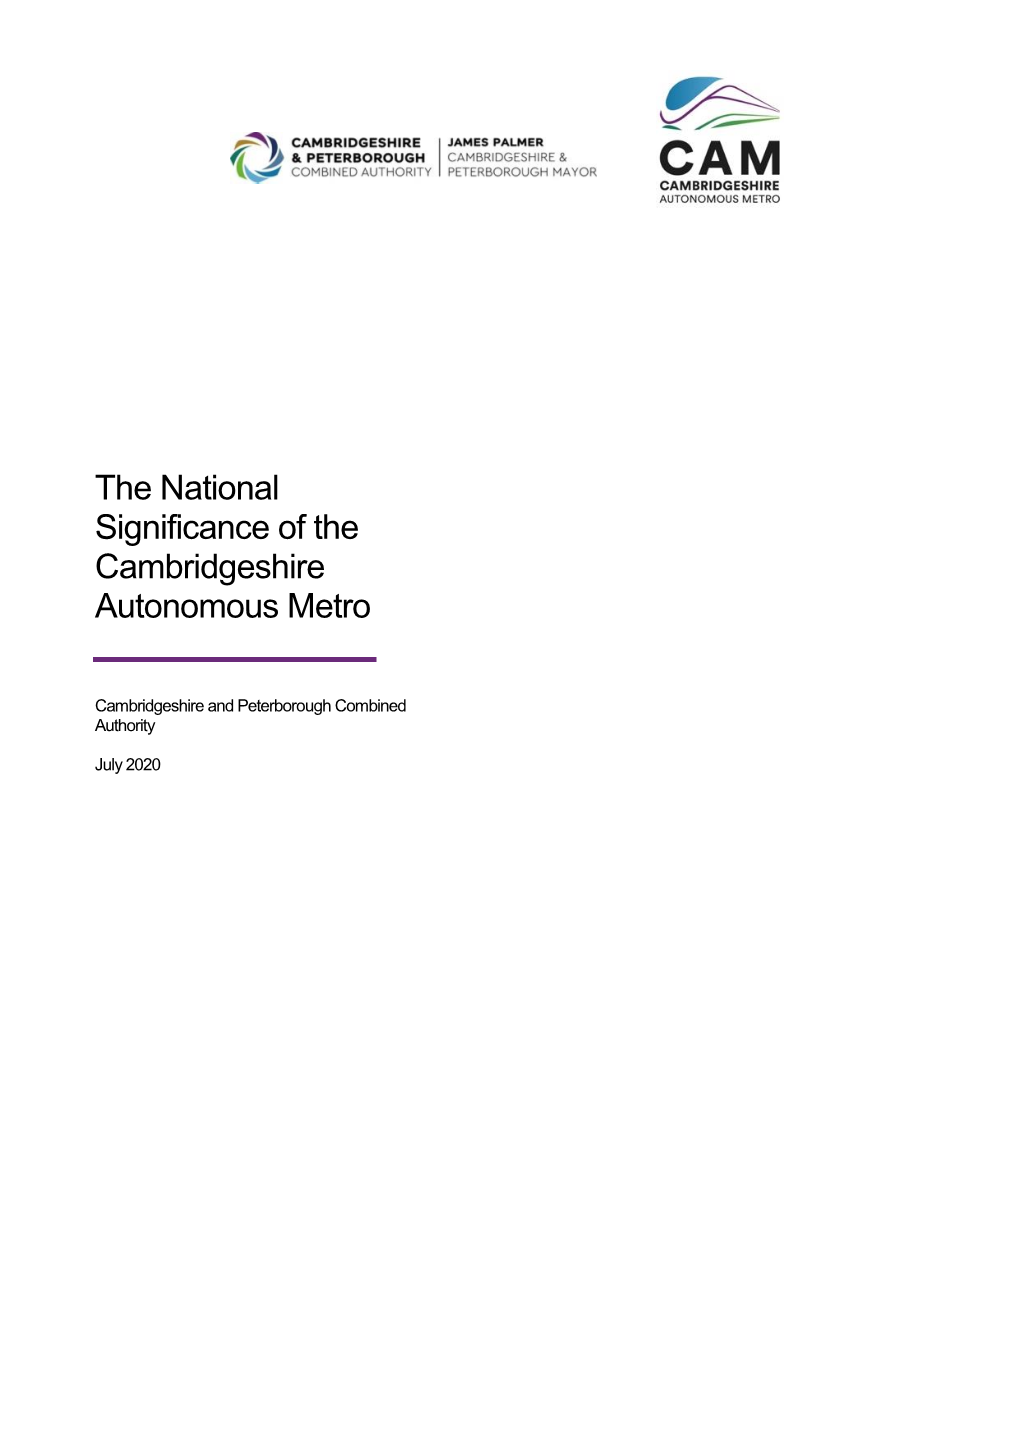 The National Significance of the Cambridgeshire Autonomous Metro